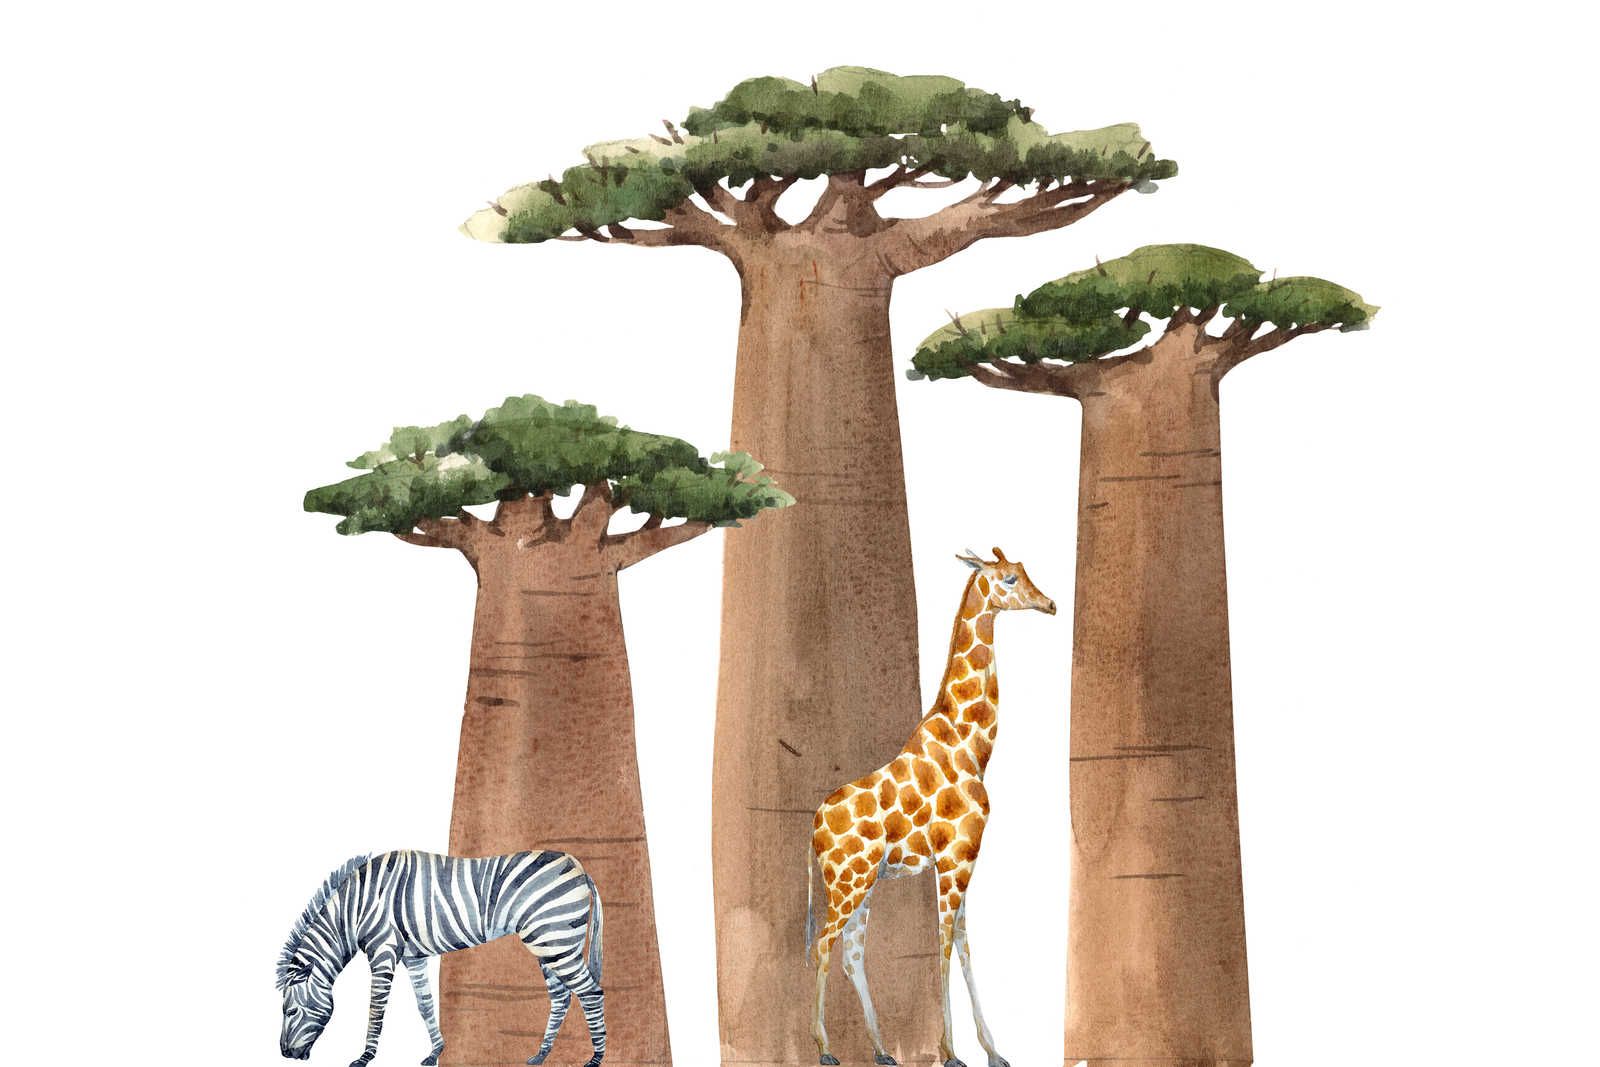             Tela Savana con Giraffa e Zebra - 120 cm x 80 cm
        